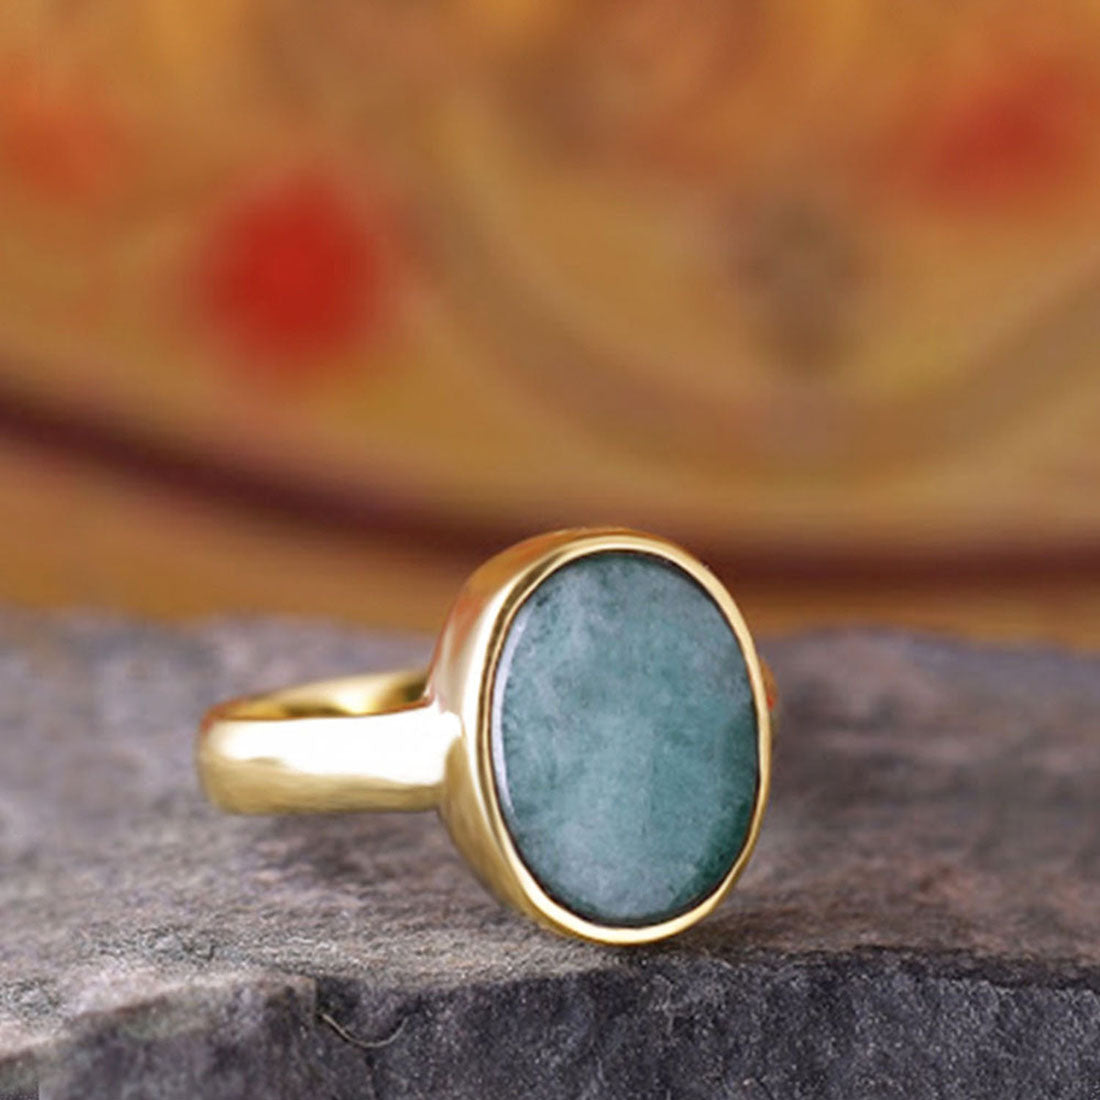 Buy Gemstone Industry Attractive Emerald Stone Ring Original Certtified Panna  Ratna Ki Anguthi Premium Pachu Stone Ring For Men Green Emerald Markatham  Ring Emerald Shape Rashi Ratnपन्ना रत्न ओरिजिनल रिंग at Amazon.in